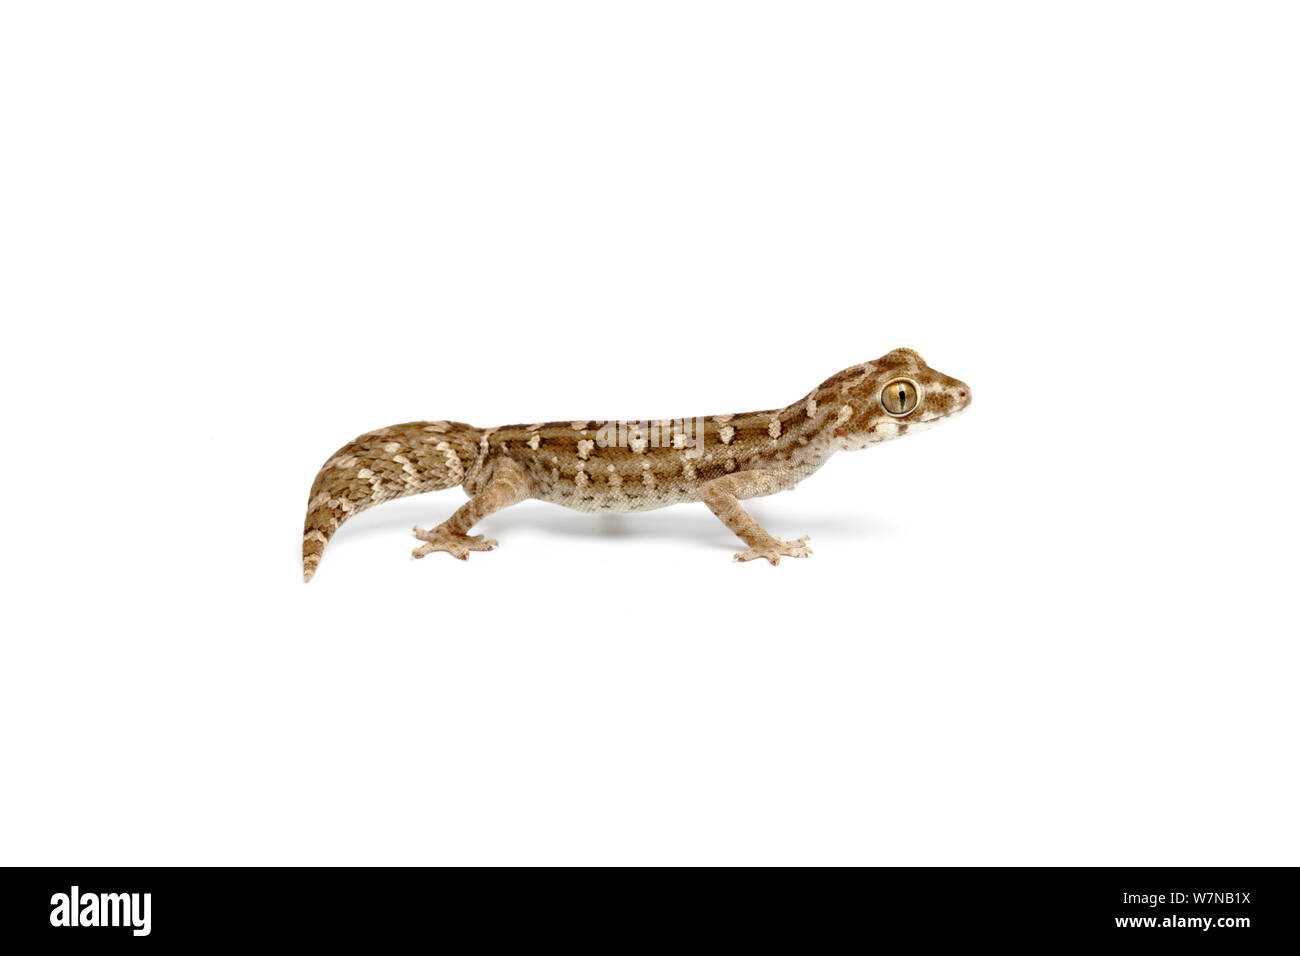 Zanahoria-tail viper gecko (Hemidactylus imbricata), cautiva, ocurre la India y Pakistán. Foto de stock